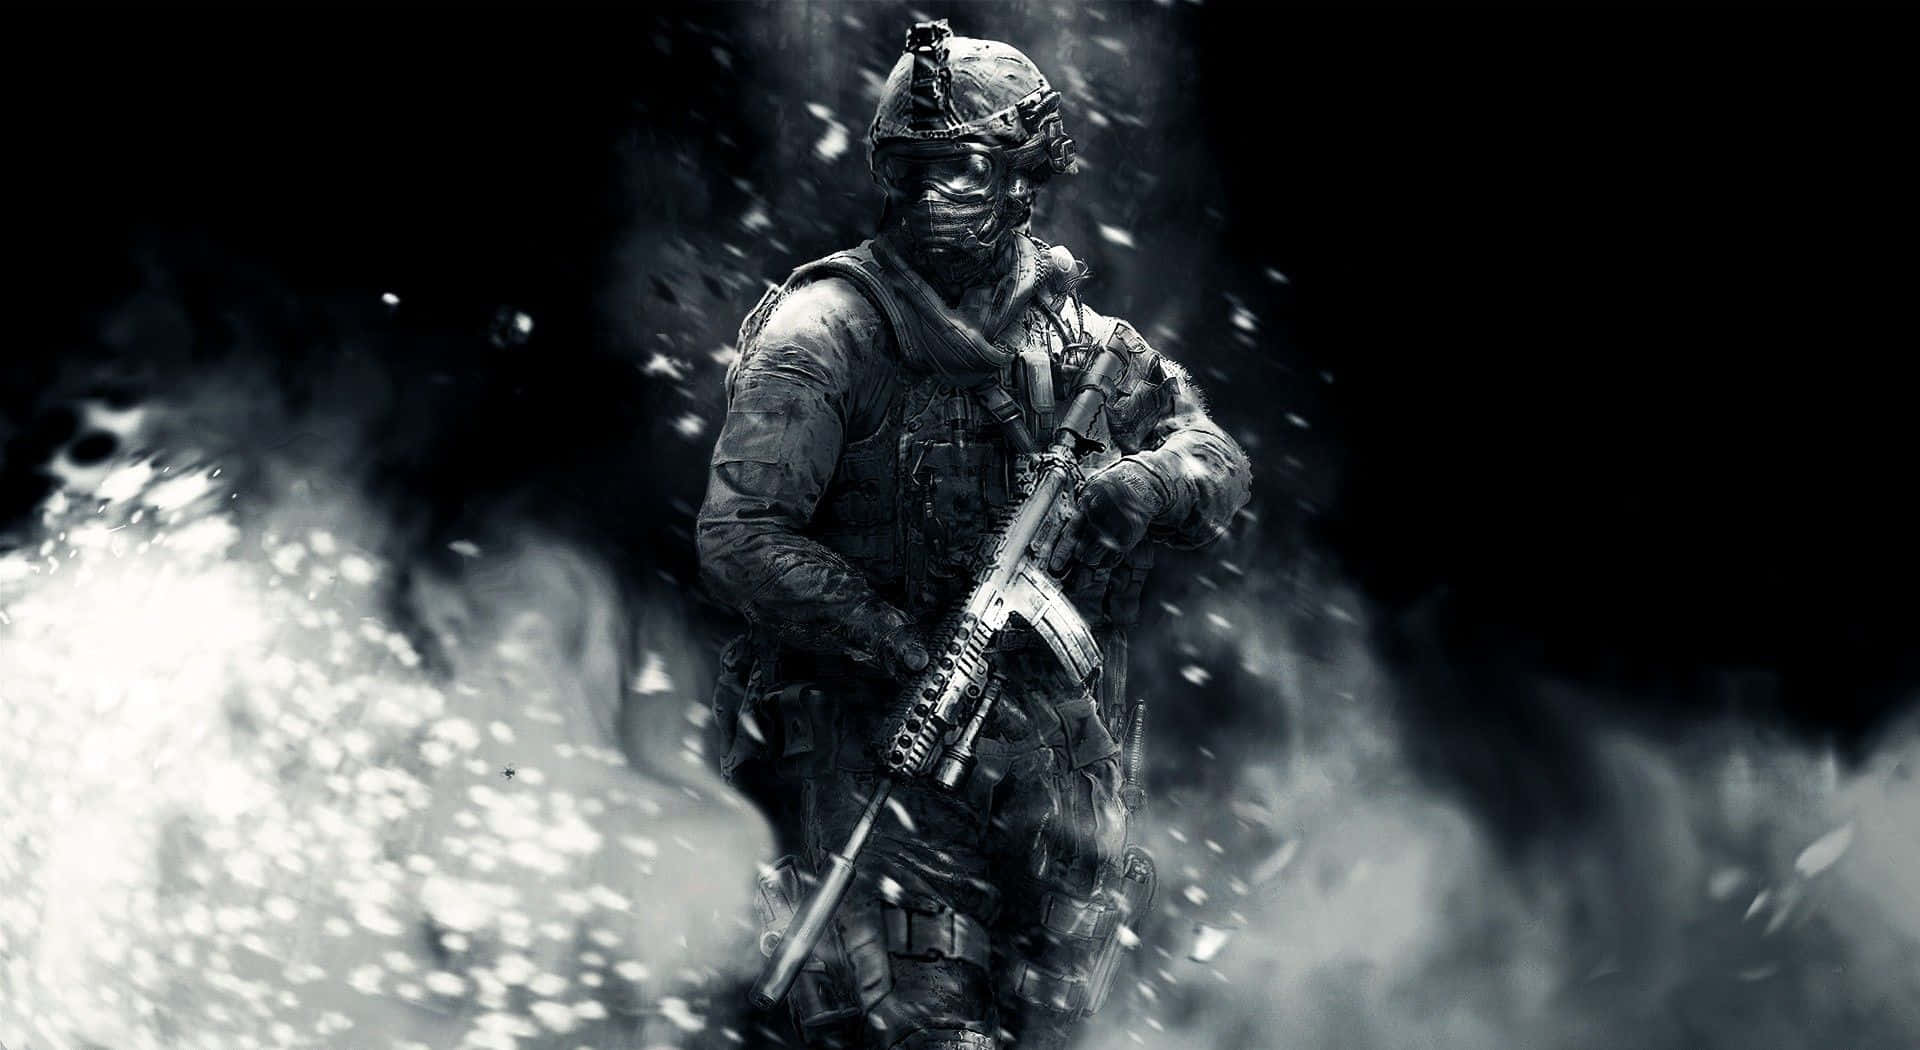 Spilmodern Warfare Med Call Of Duty Videospillet.